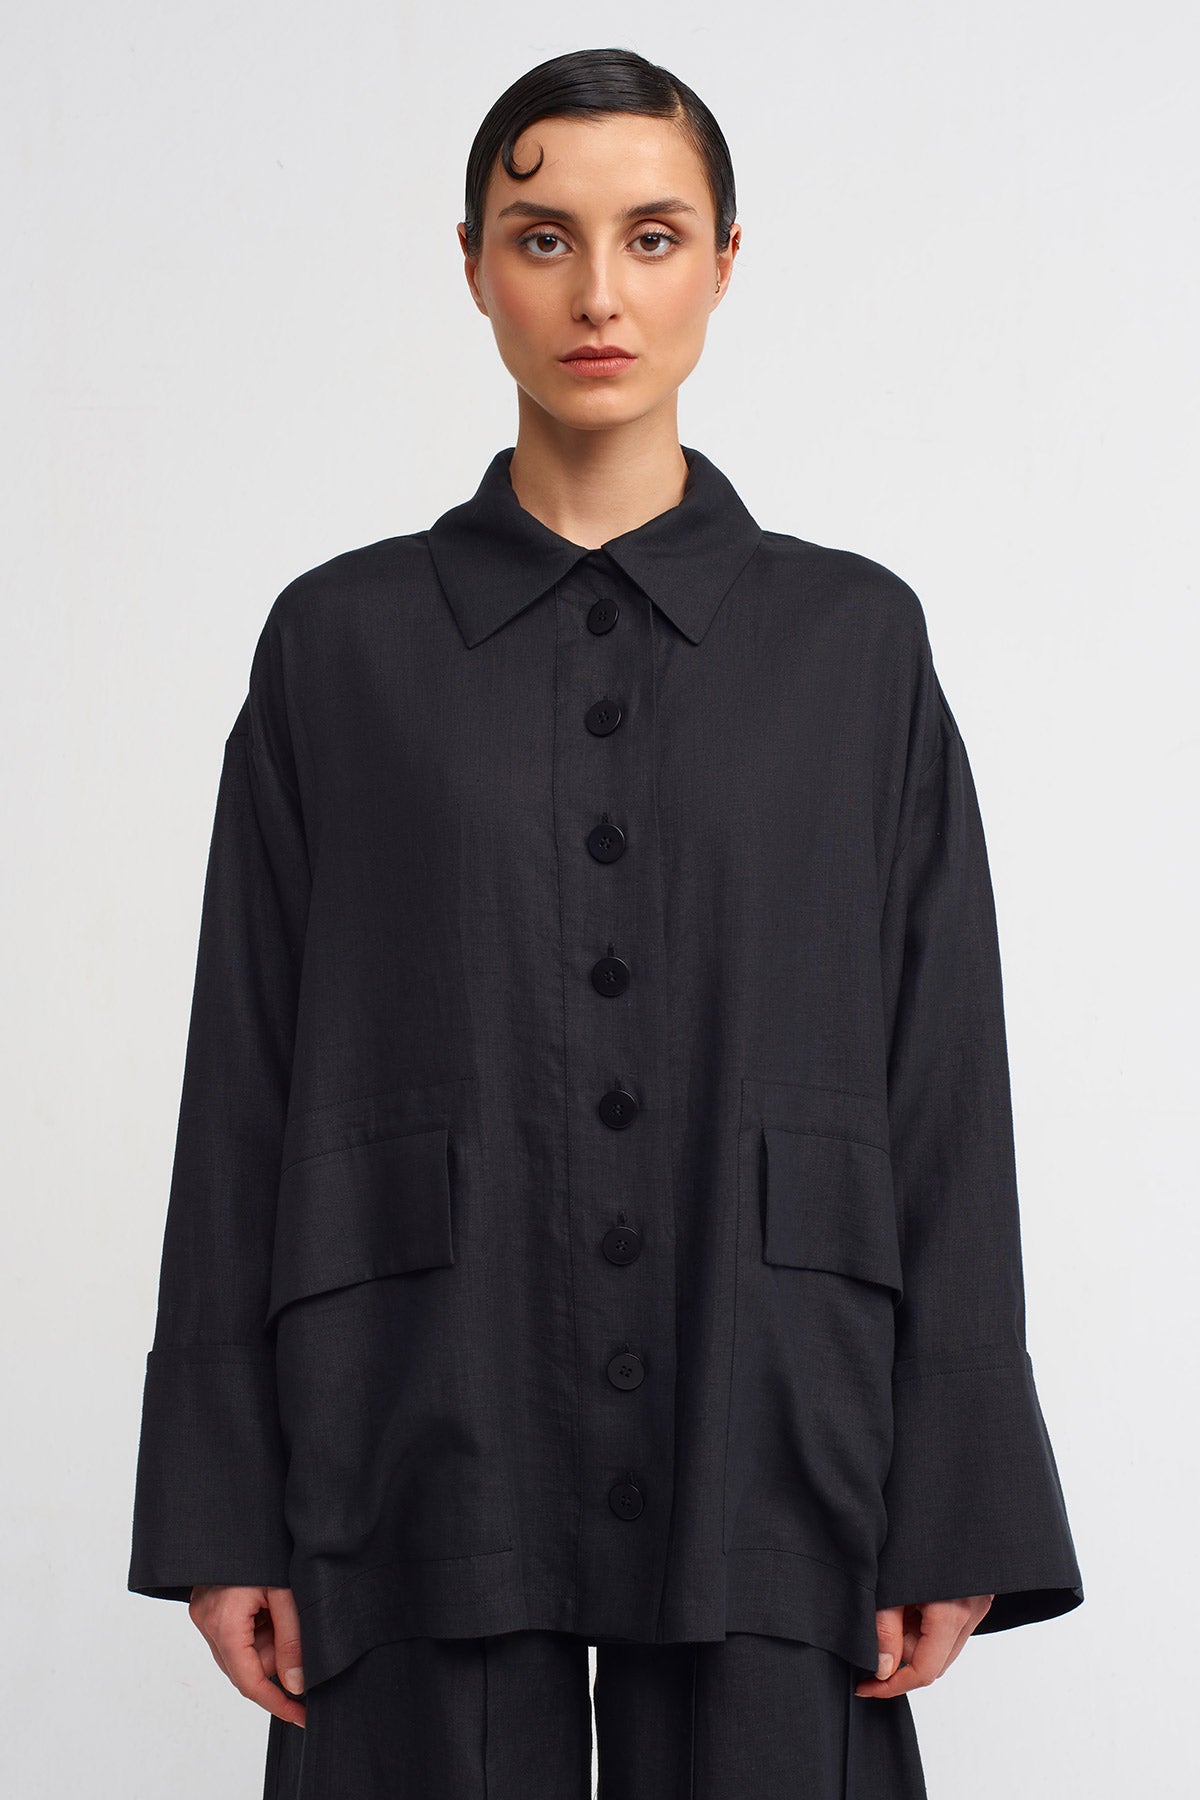 Black Pocketed Linen Shirt-Y241011006